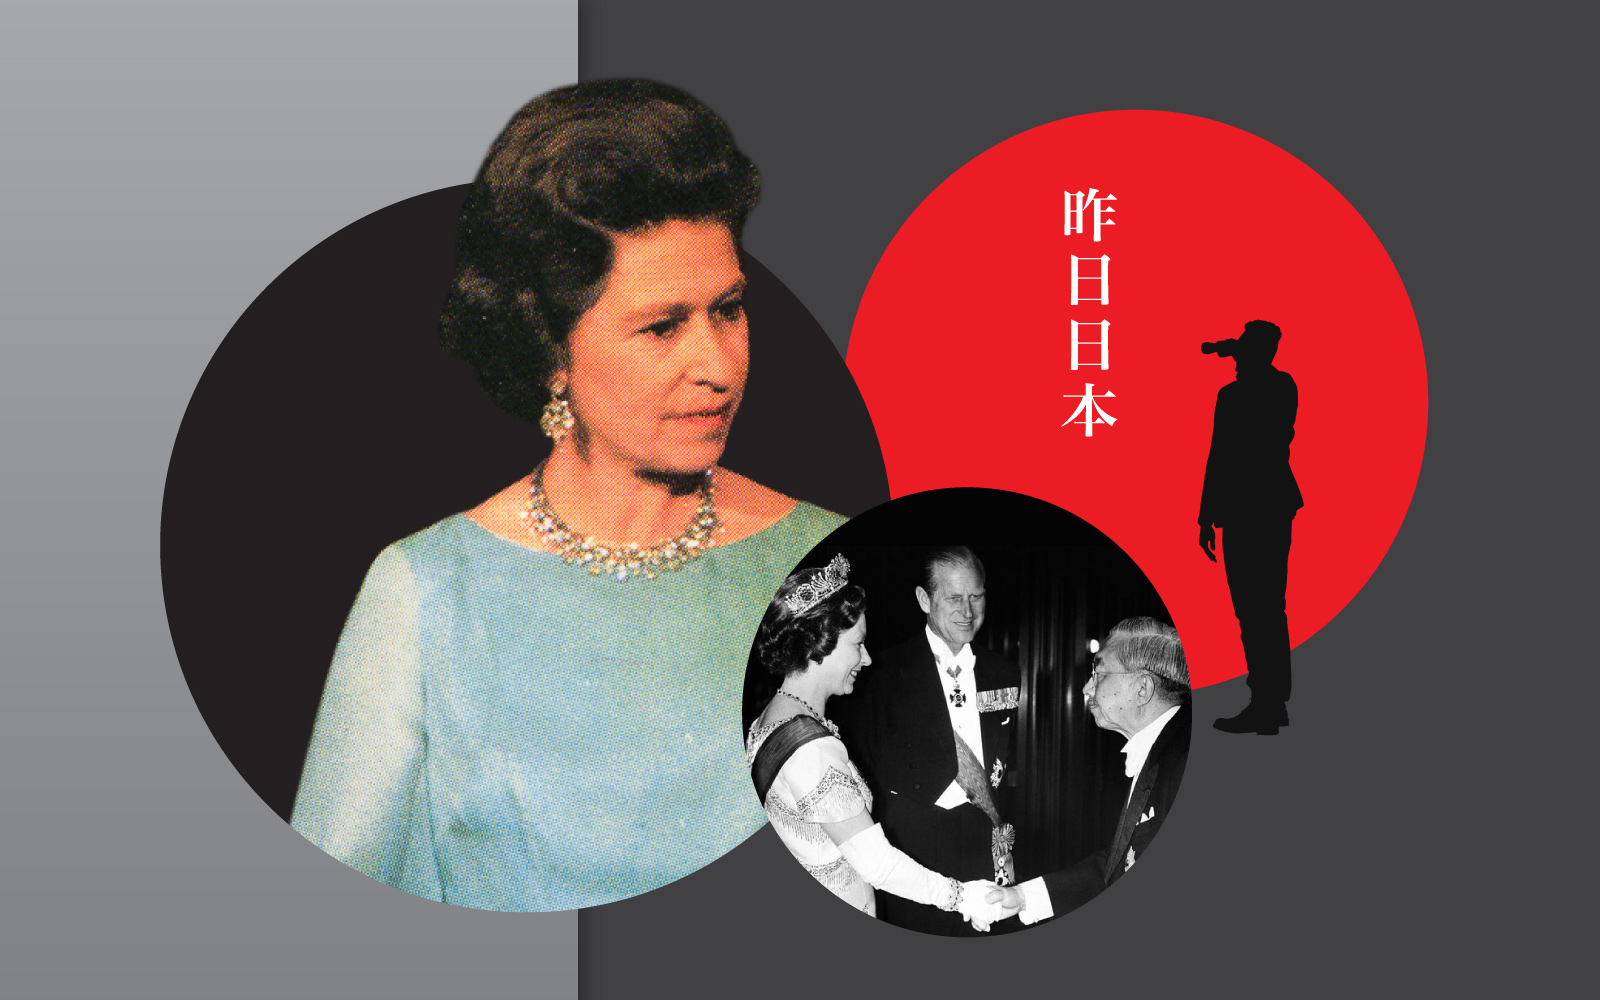 Queen Elizabeth II avoids discussing the war with Emperor Hirohito